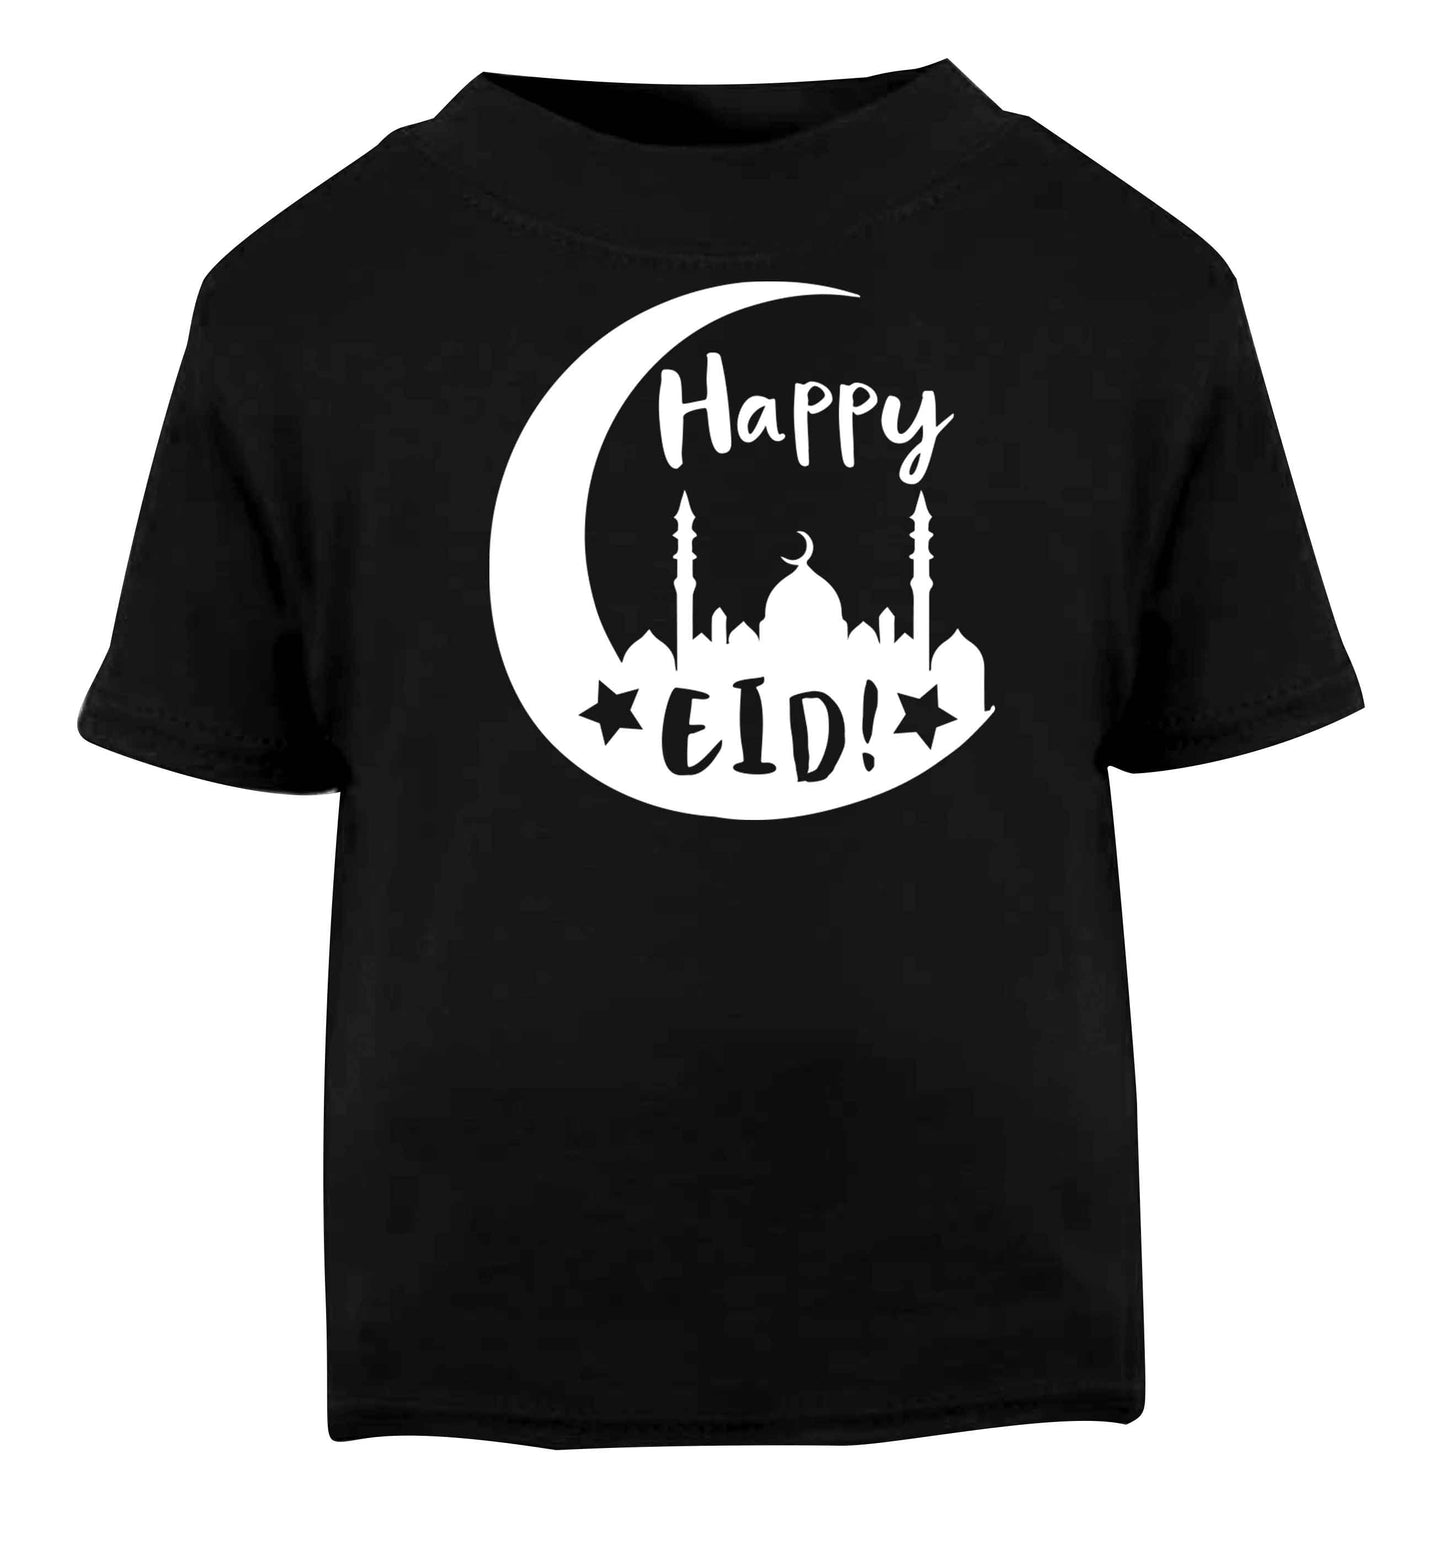 Happy Eid Black baby toddler Tshirt 2 years